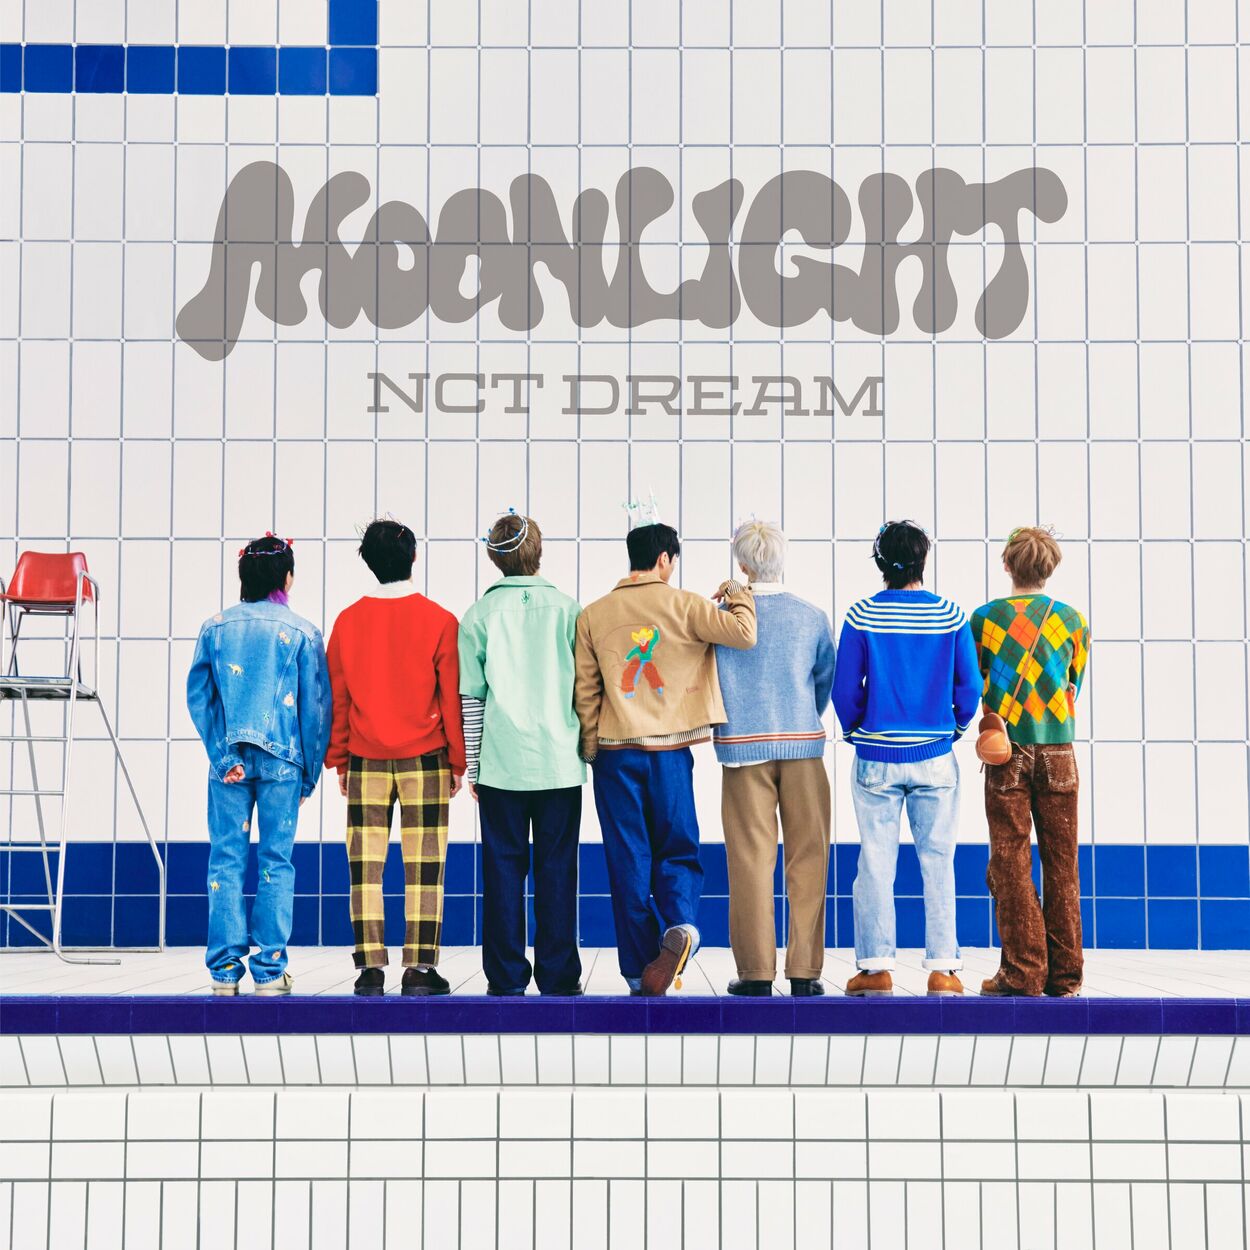 NCT DREAM – Moonlight – Single